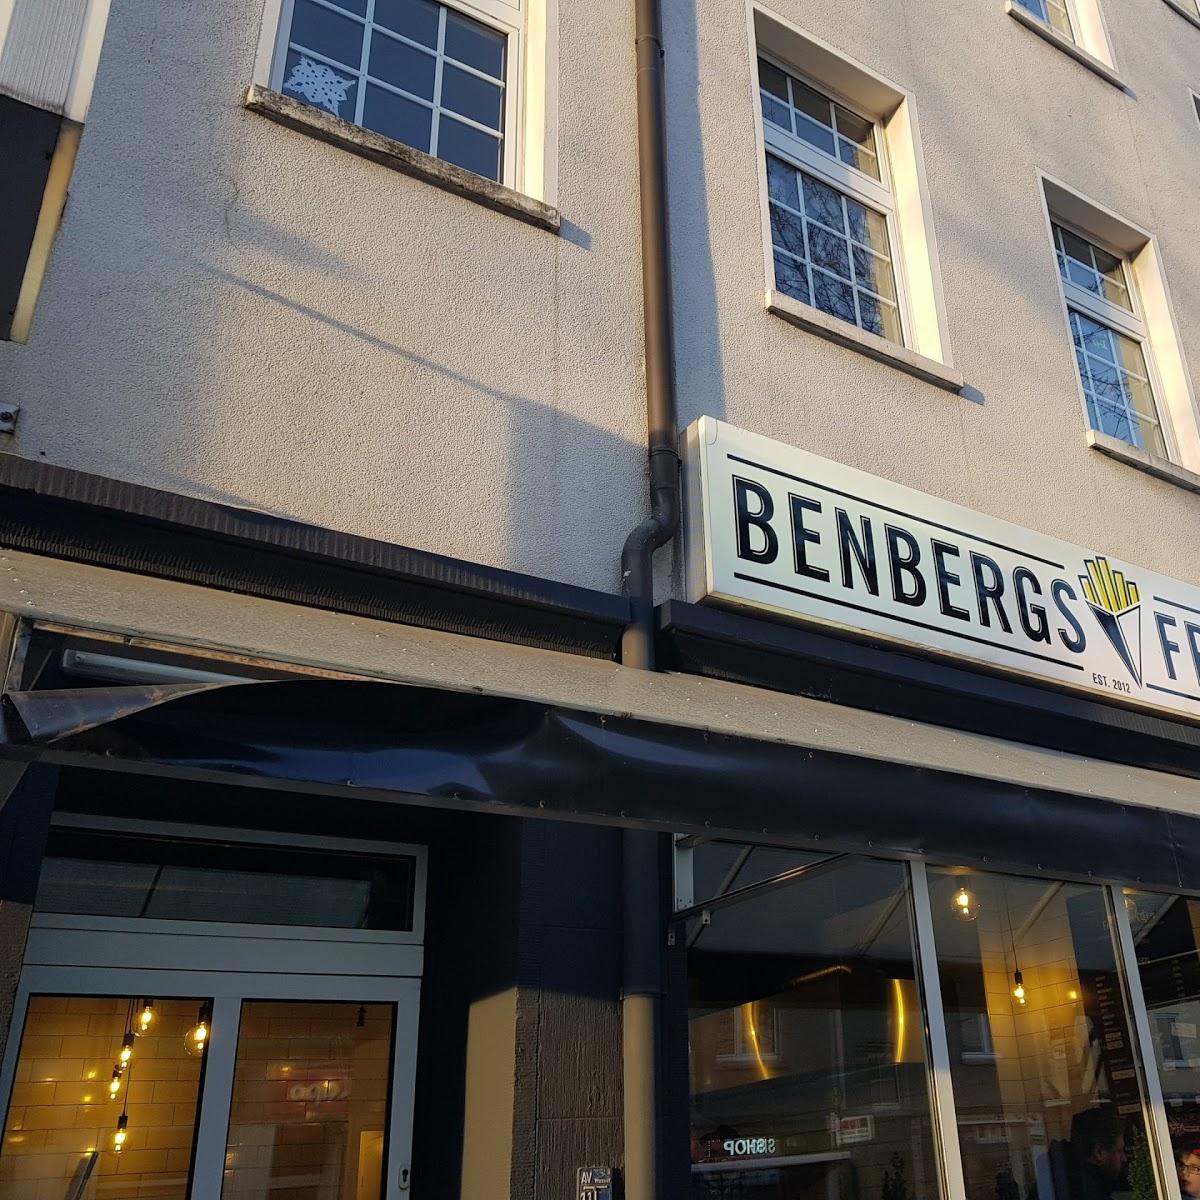 Restaurant "Benbergs Fritten" in Dortmund